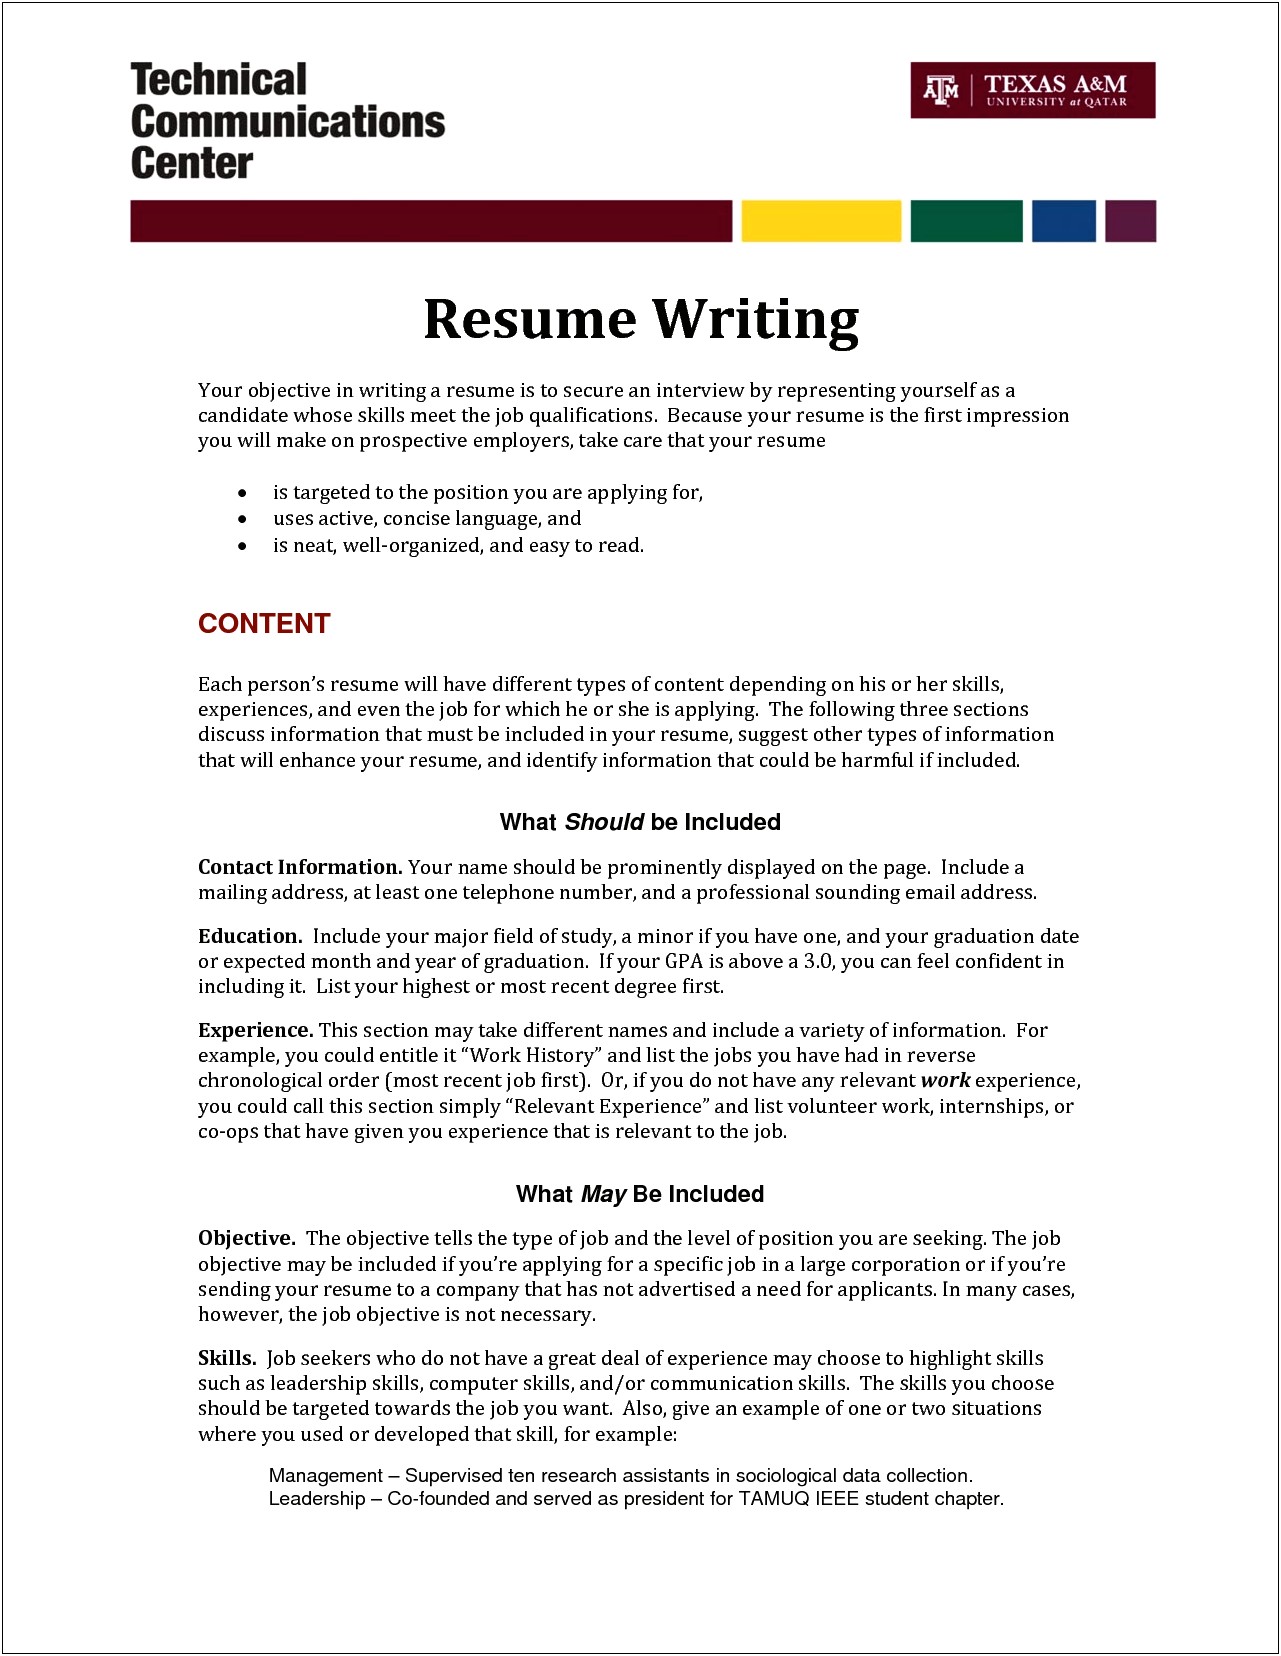 Resume Objective Statement Management Position